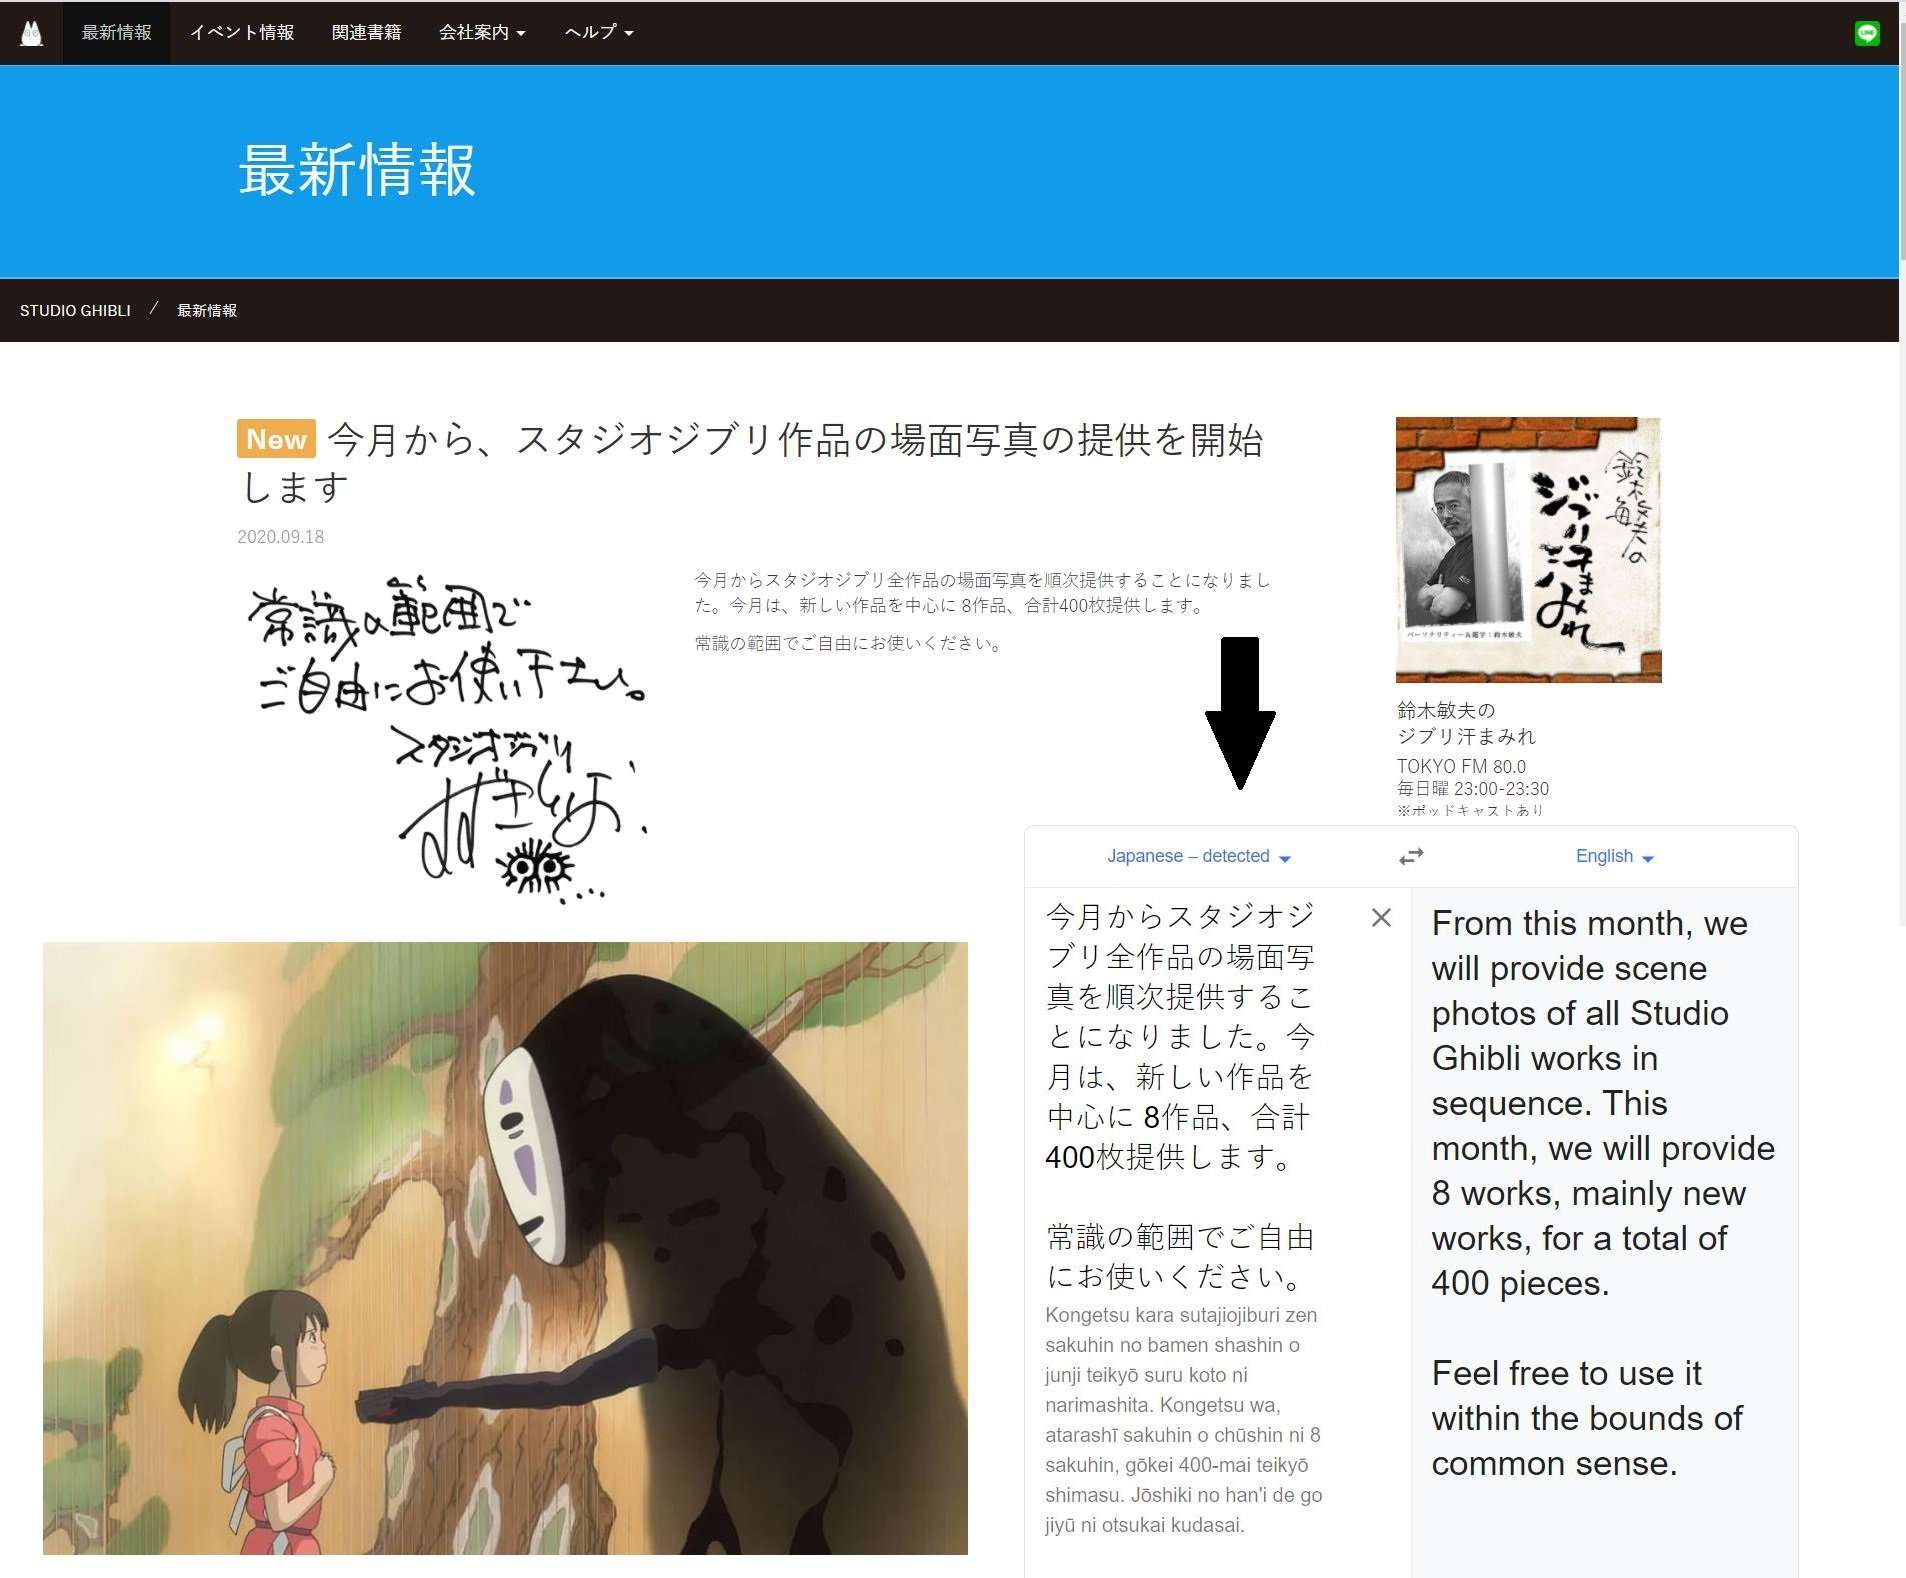 Studio Ghibli's website translation